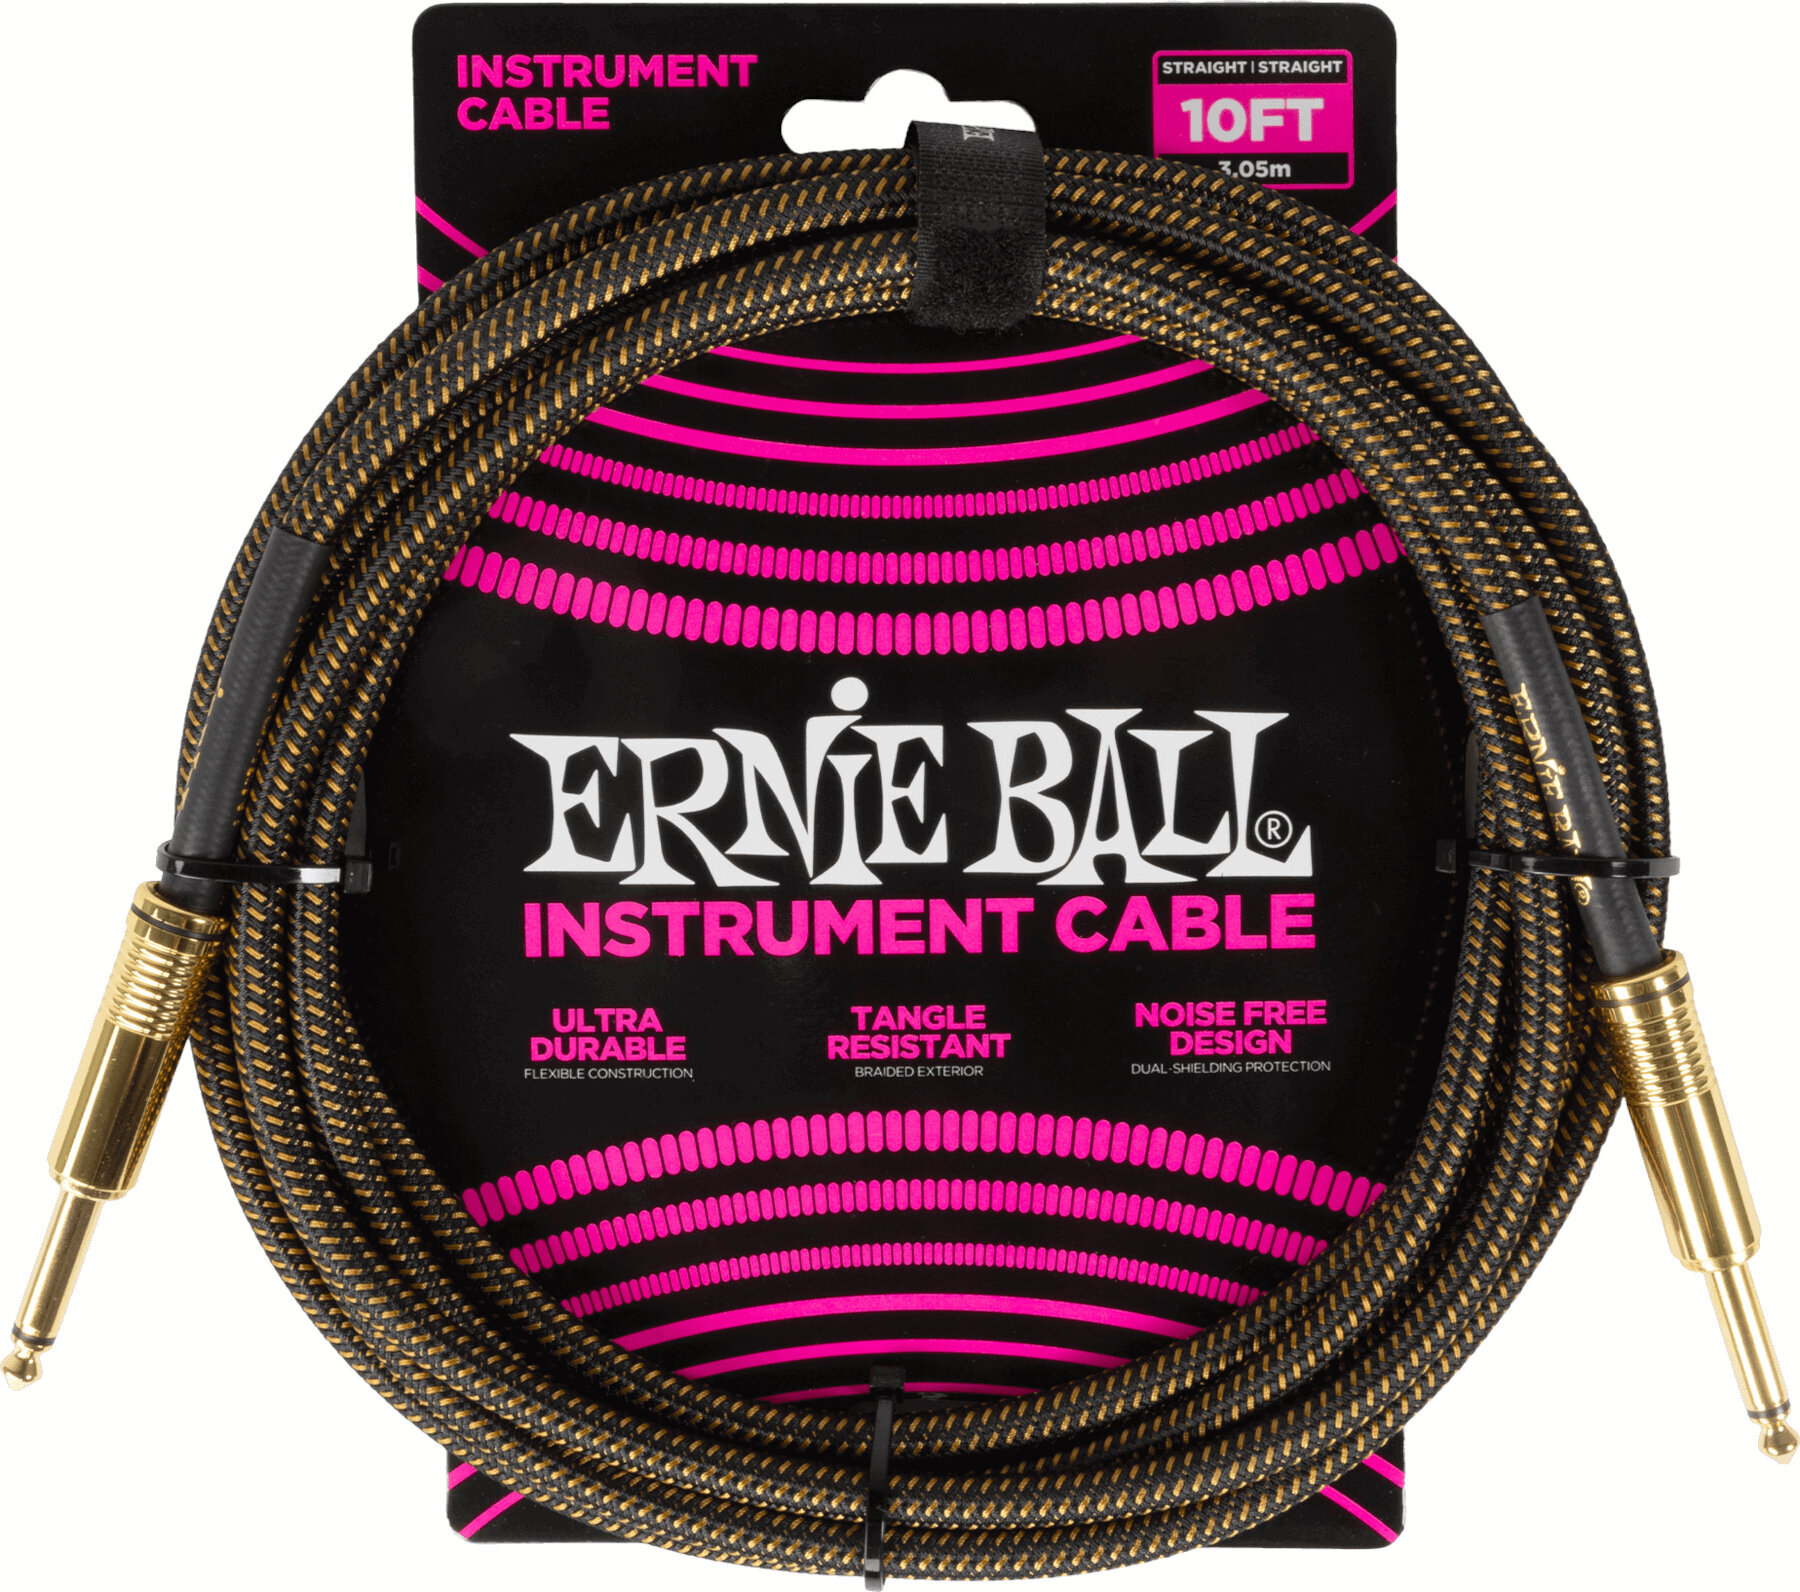 Instrumentkabel Ernie Ball Braided Instrument Cable Straight/Straight Brun 3 m Rak - Rak